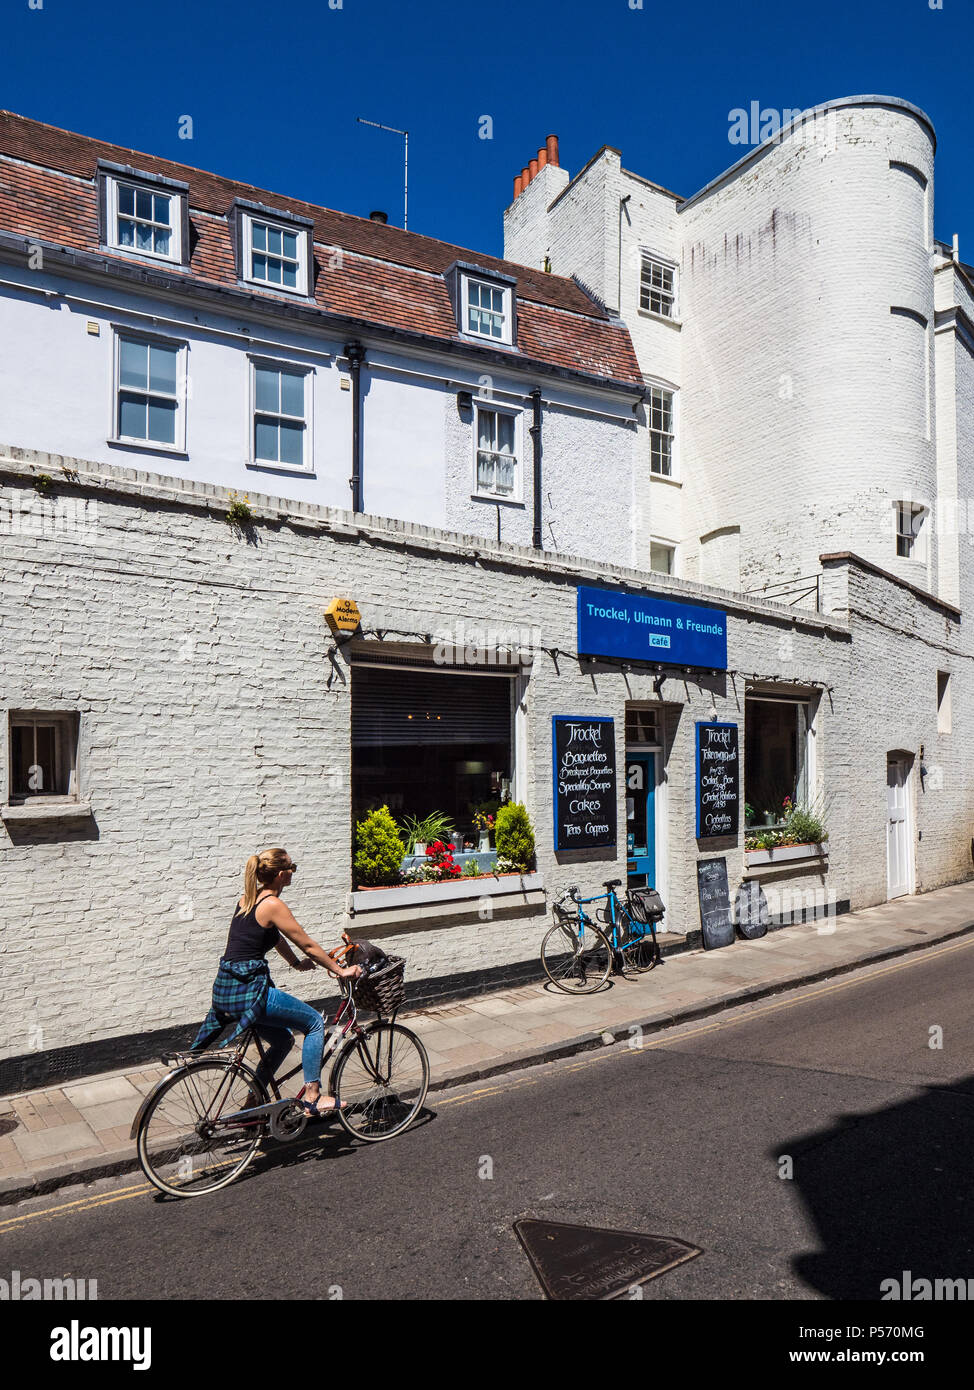 Trockel, Ulmann & Freunde Cafe in Cambridge - cyclist rides past the German style cafe on Pembroke Street central Cambridge Stock Photo